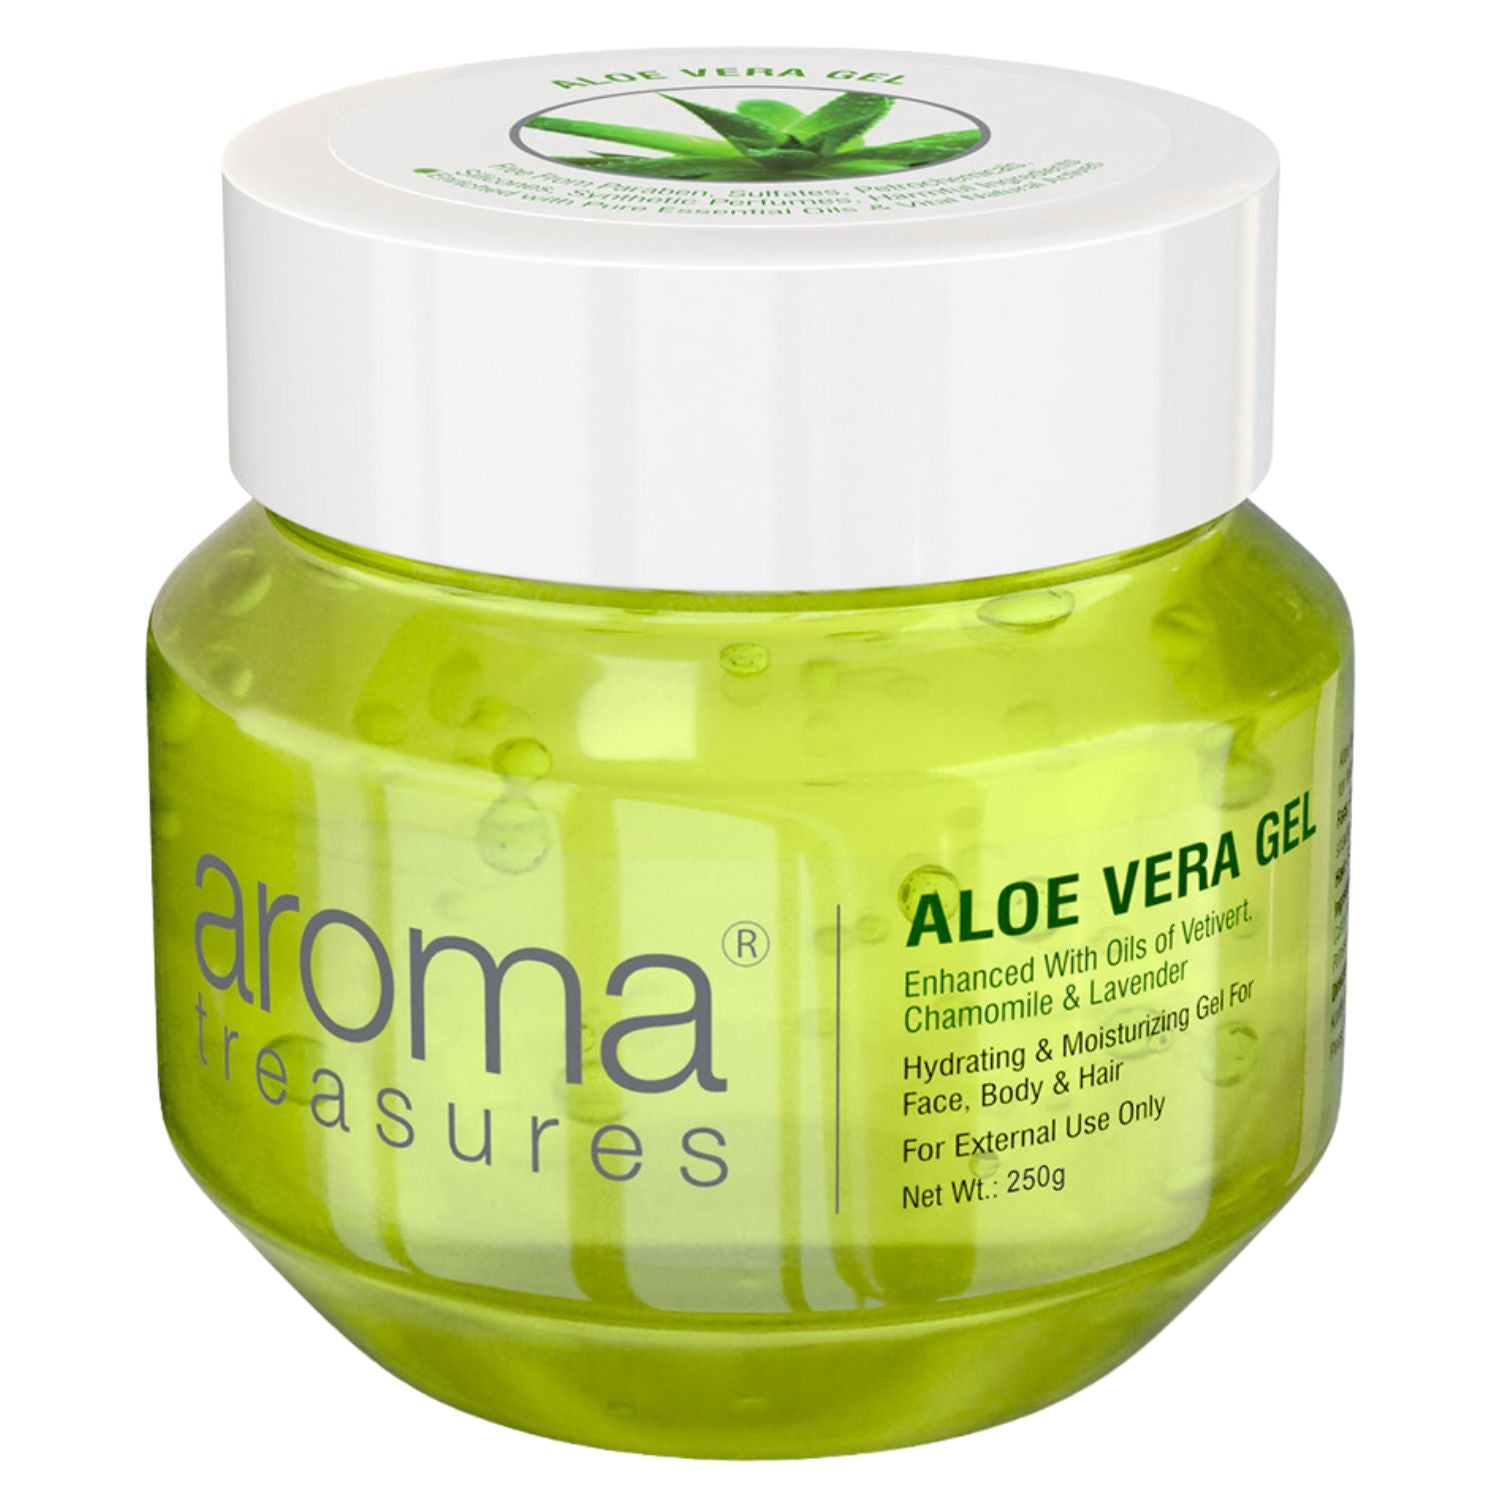 Aroma Treasures Aloe Vera Gel (Hydrating & Moisturizing Gel For Face, Body & Hair) - 250g